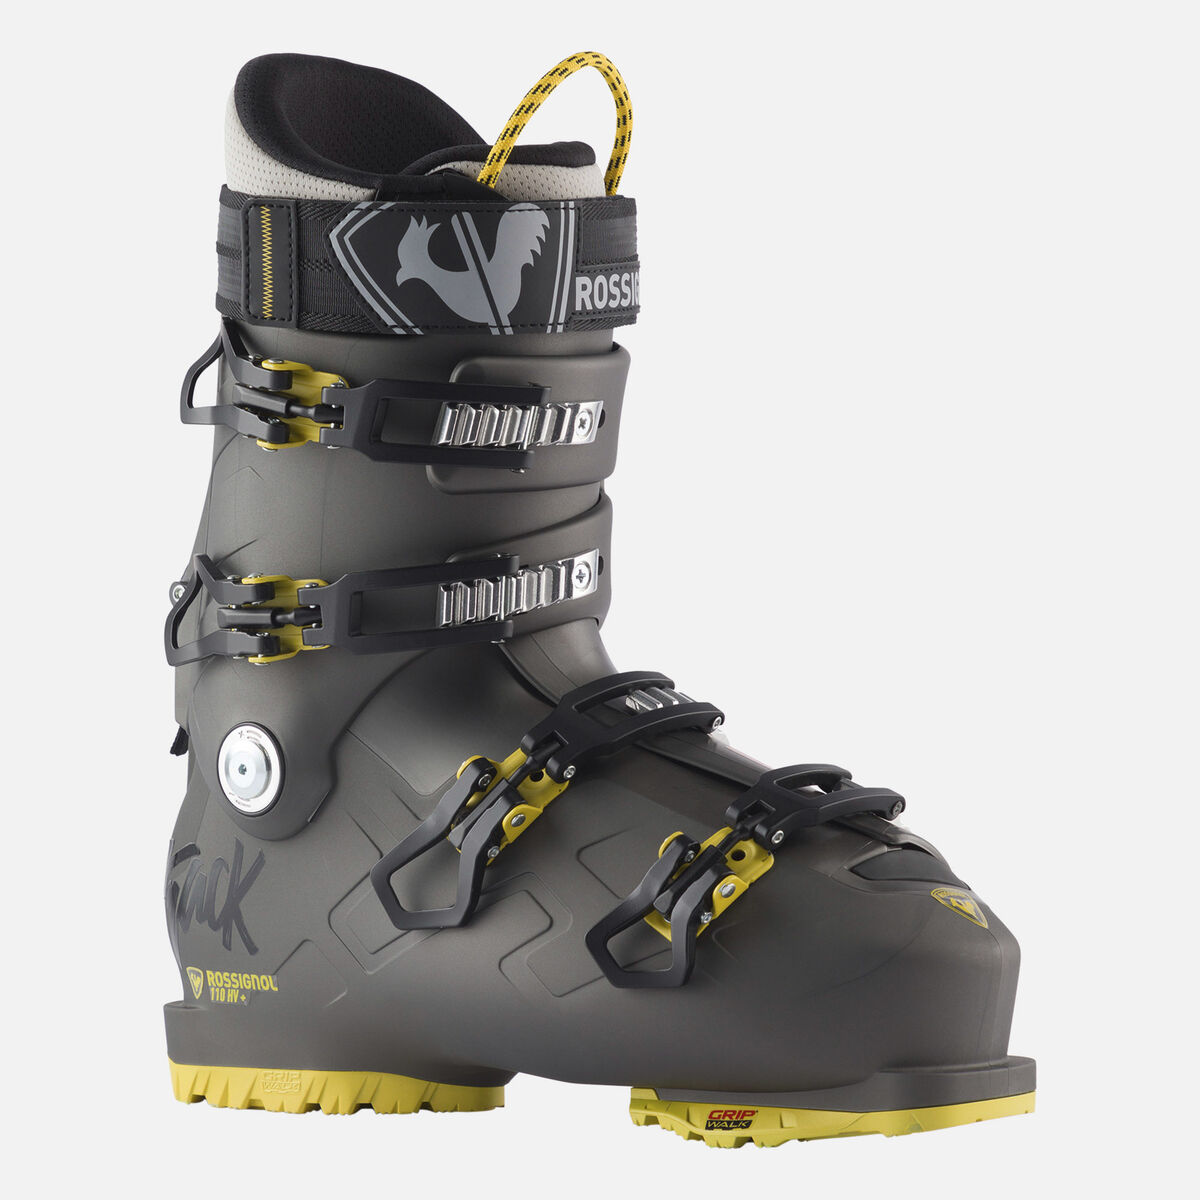 Men's All Mountain Ski Boots Track 110 HV+ Gw